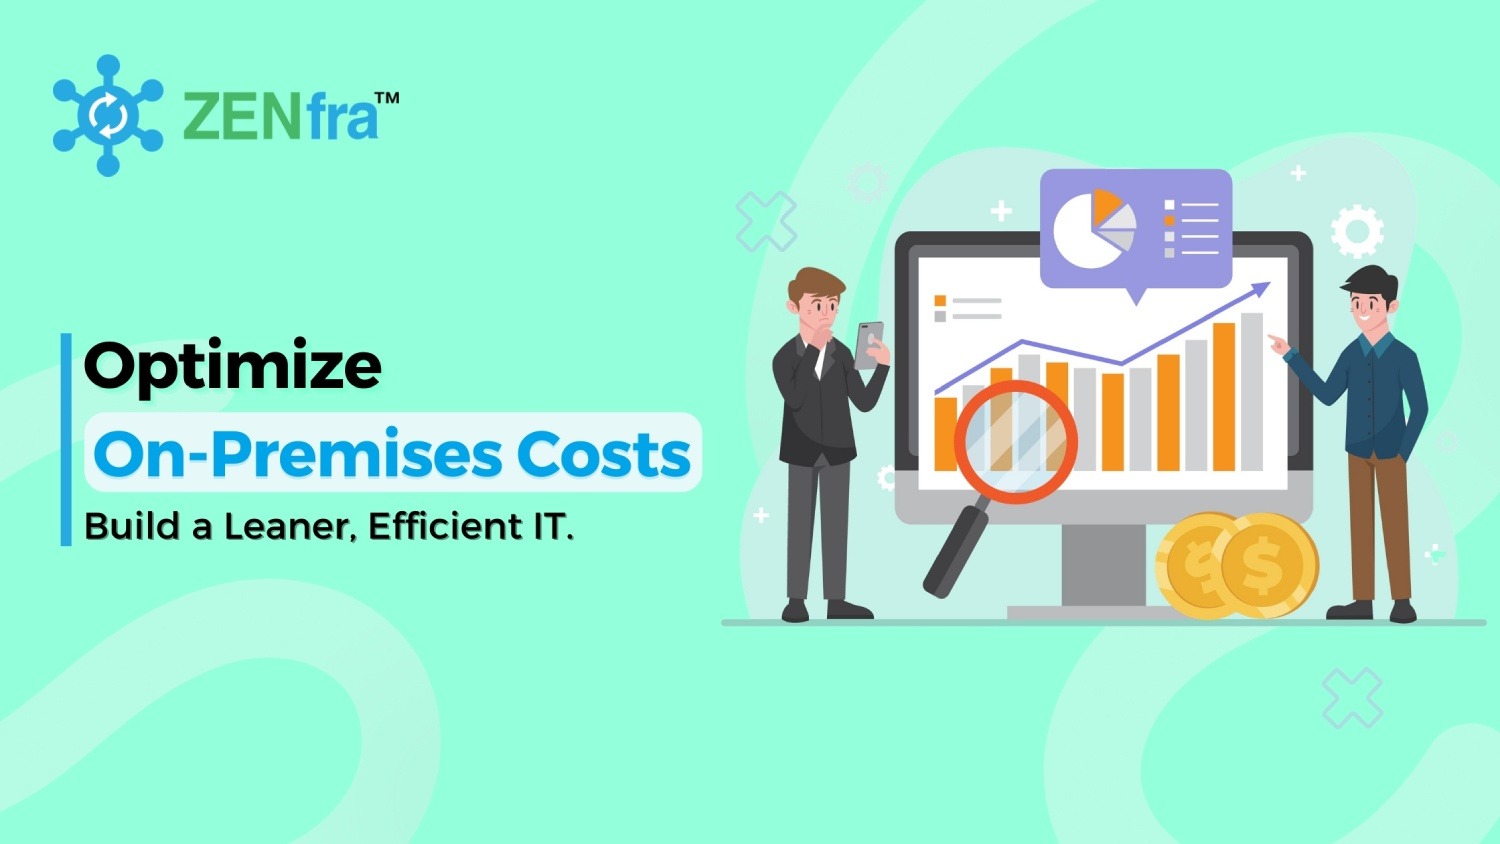 Optimize On-Premises Costs with ZENfra - Build a Leaner, Efficient IT